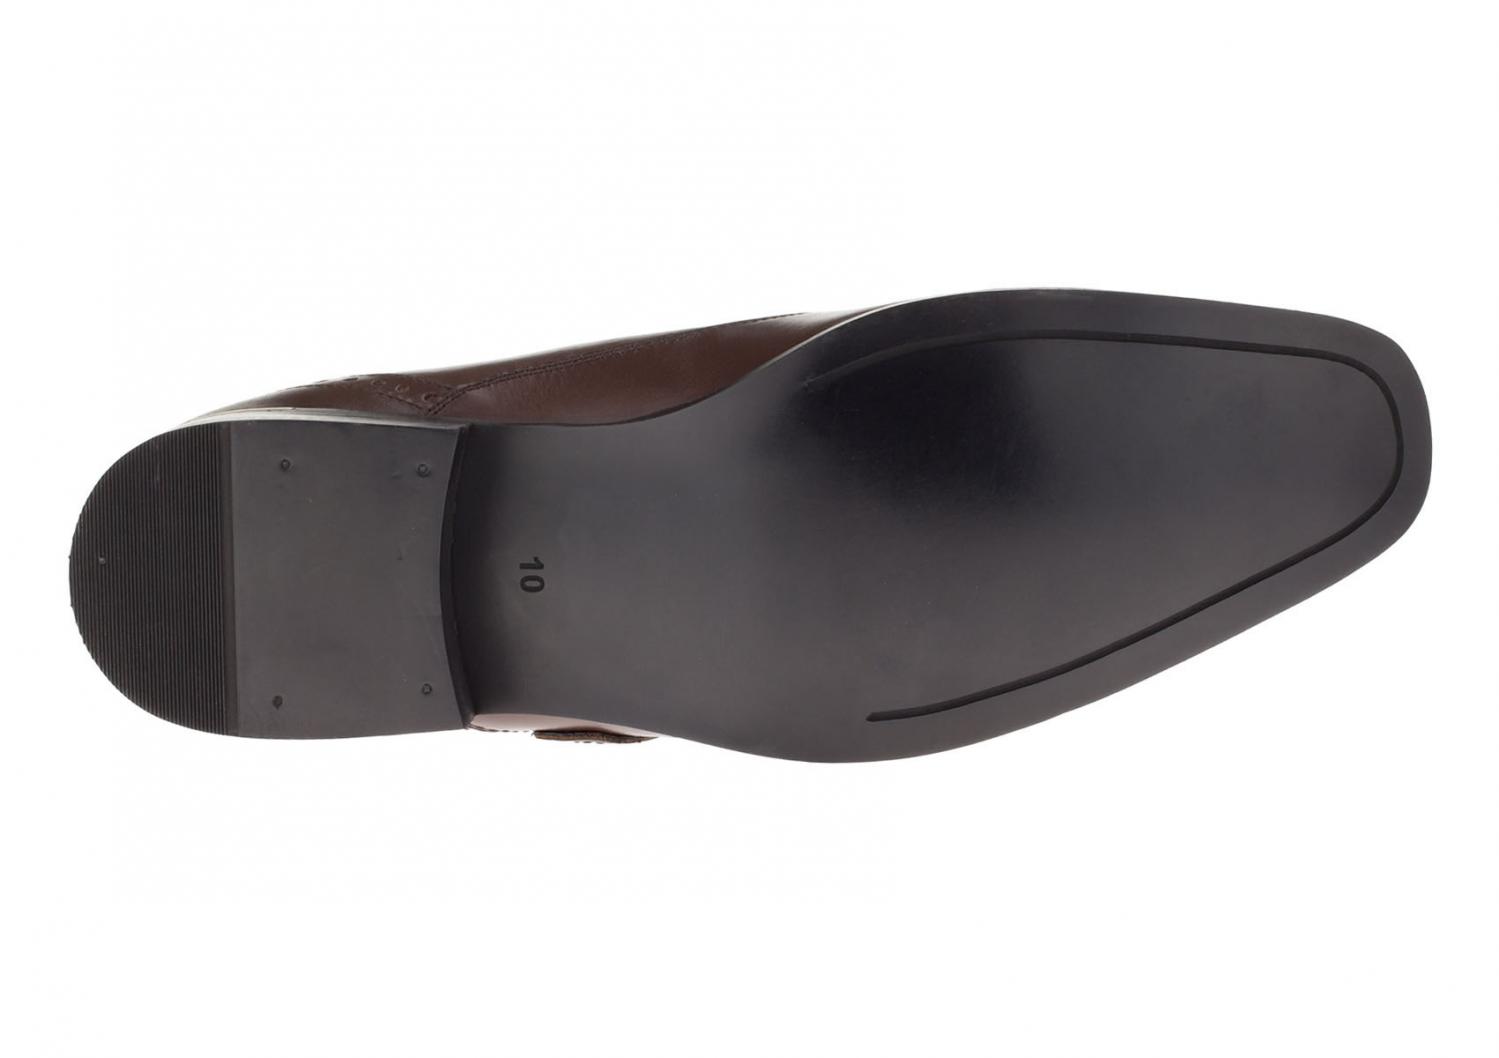 DTI GV Executive Men's Leather Dress Shoe Celio Slip-On Loafer Brown - image 4 of 7